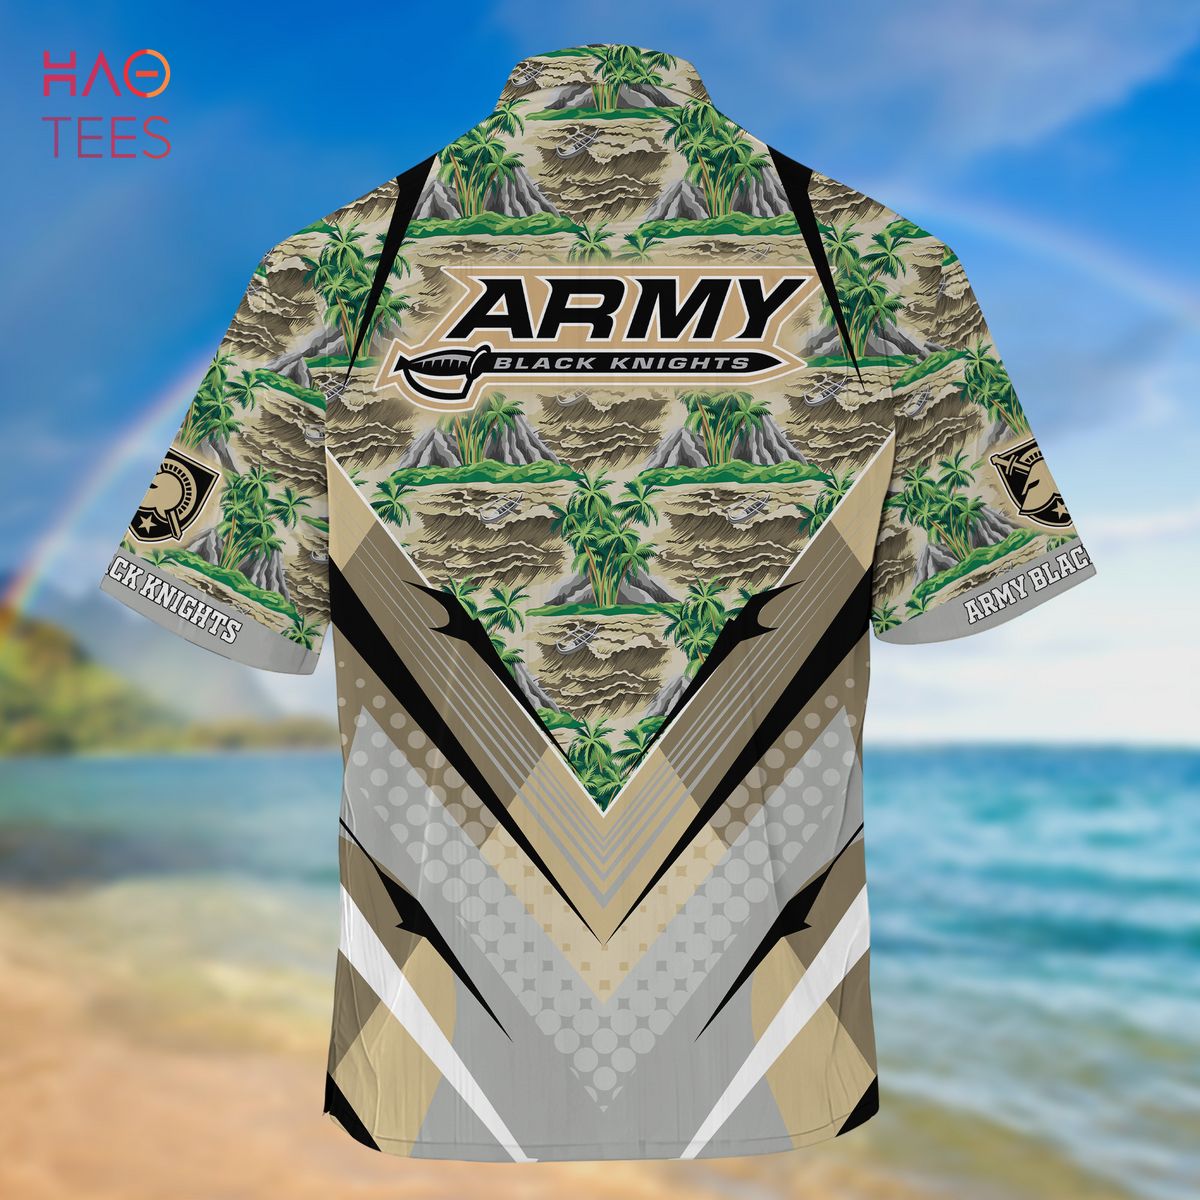 [TRENDING] Army Black Knights Summer Hawaiian Shirt And Shorts, For Sports Fans This Season